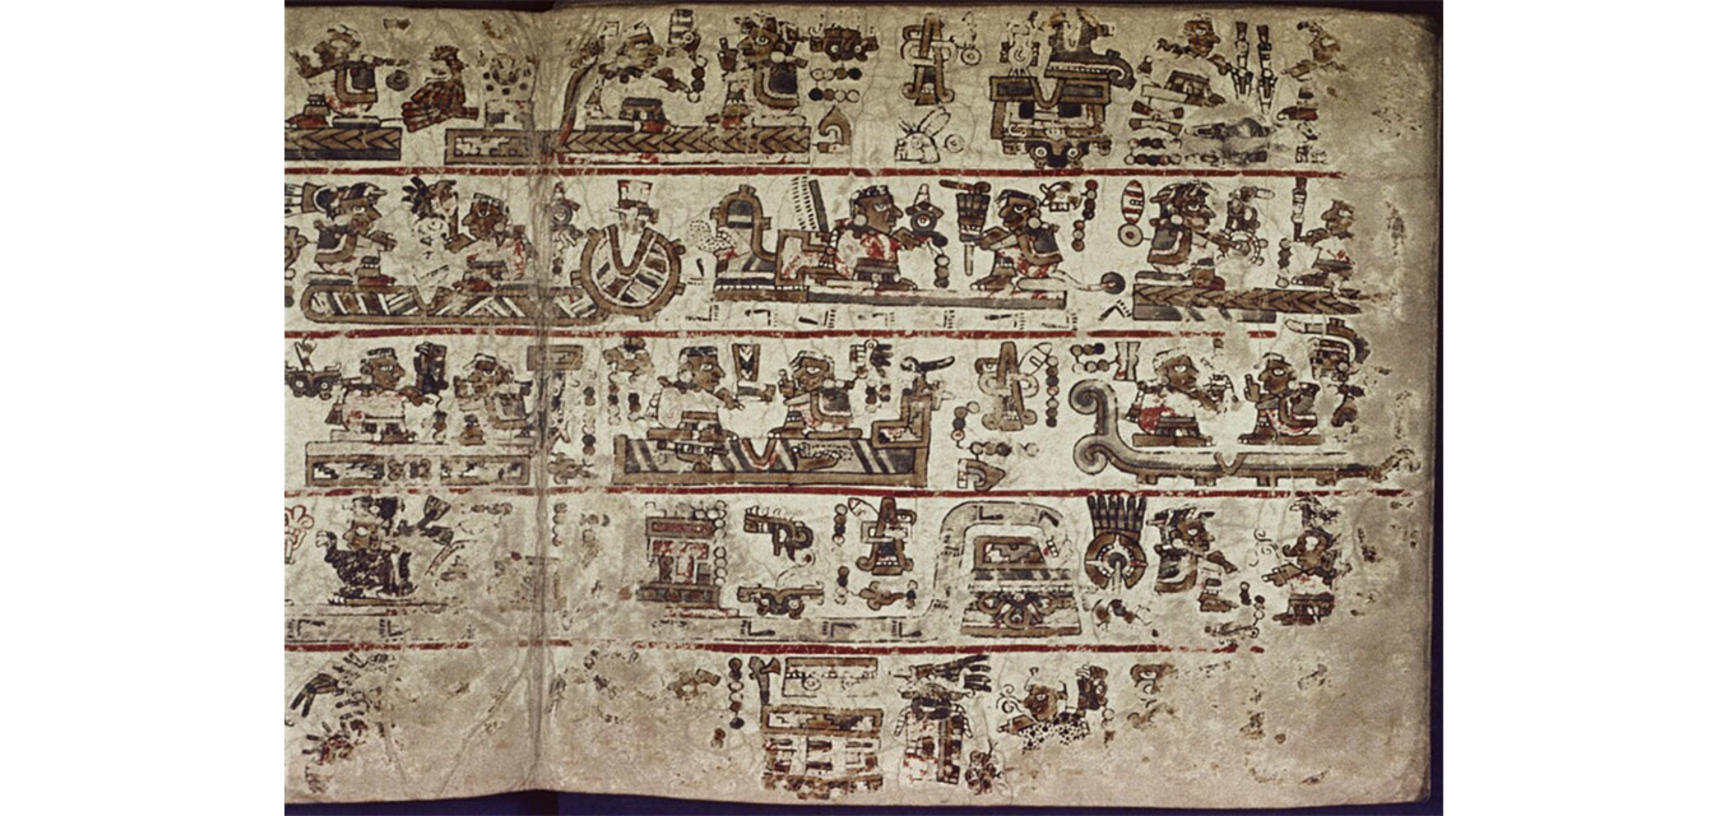 Depictions of people undertaking various activities in Mesoamerica life